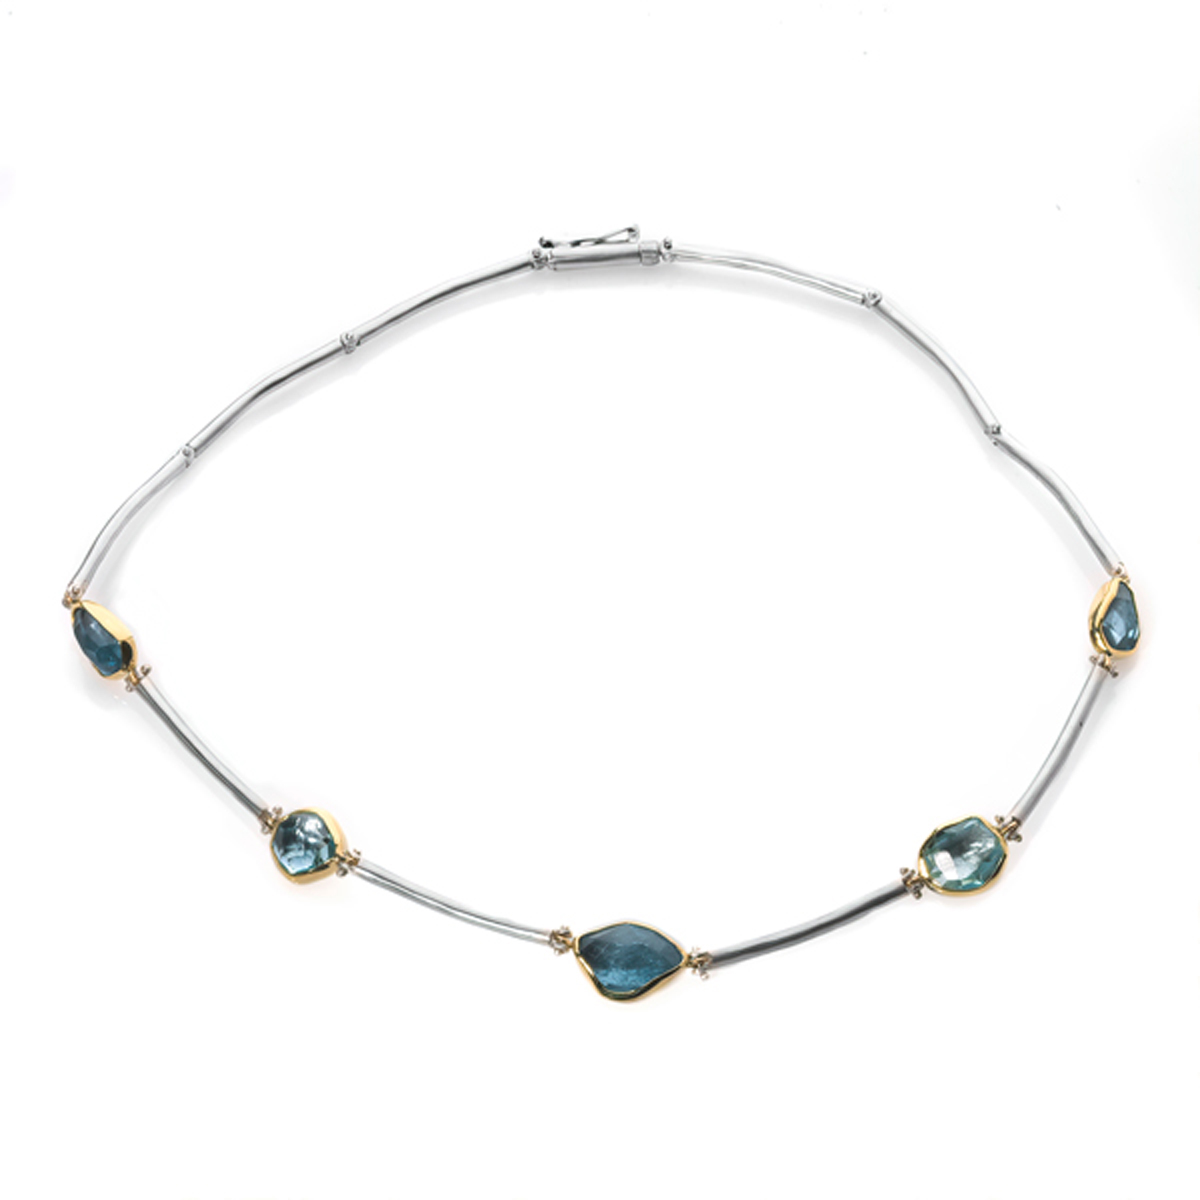 Five Aquamarine, Silver & Gold bezel necklace